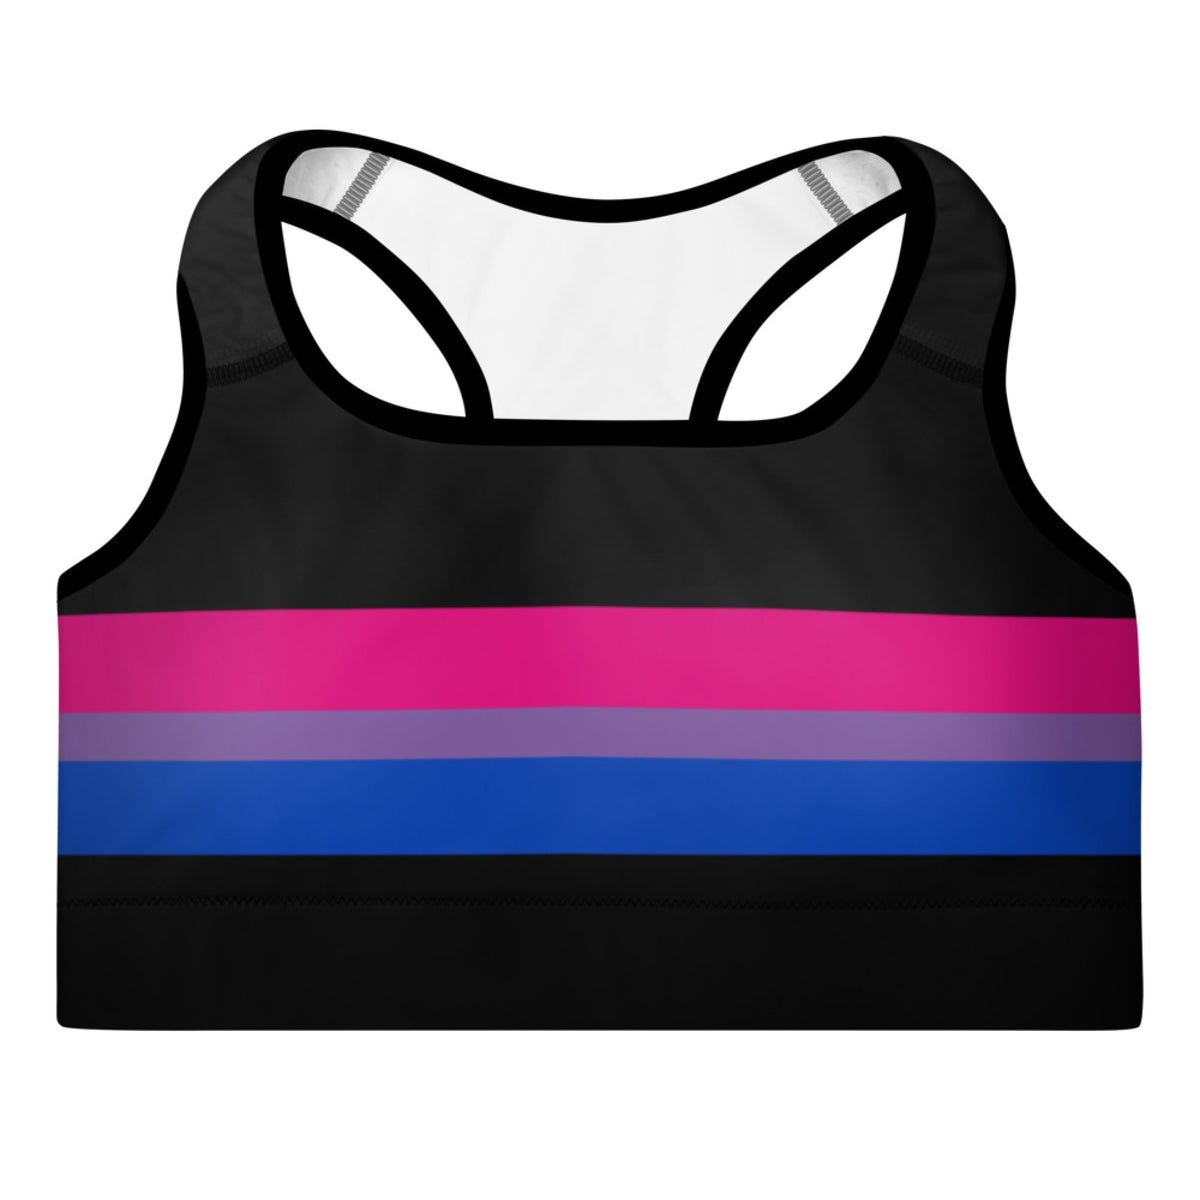 Lesbian Pride Sports Bra – Prideboxco